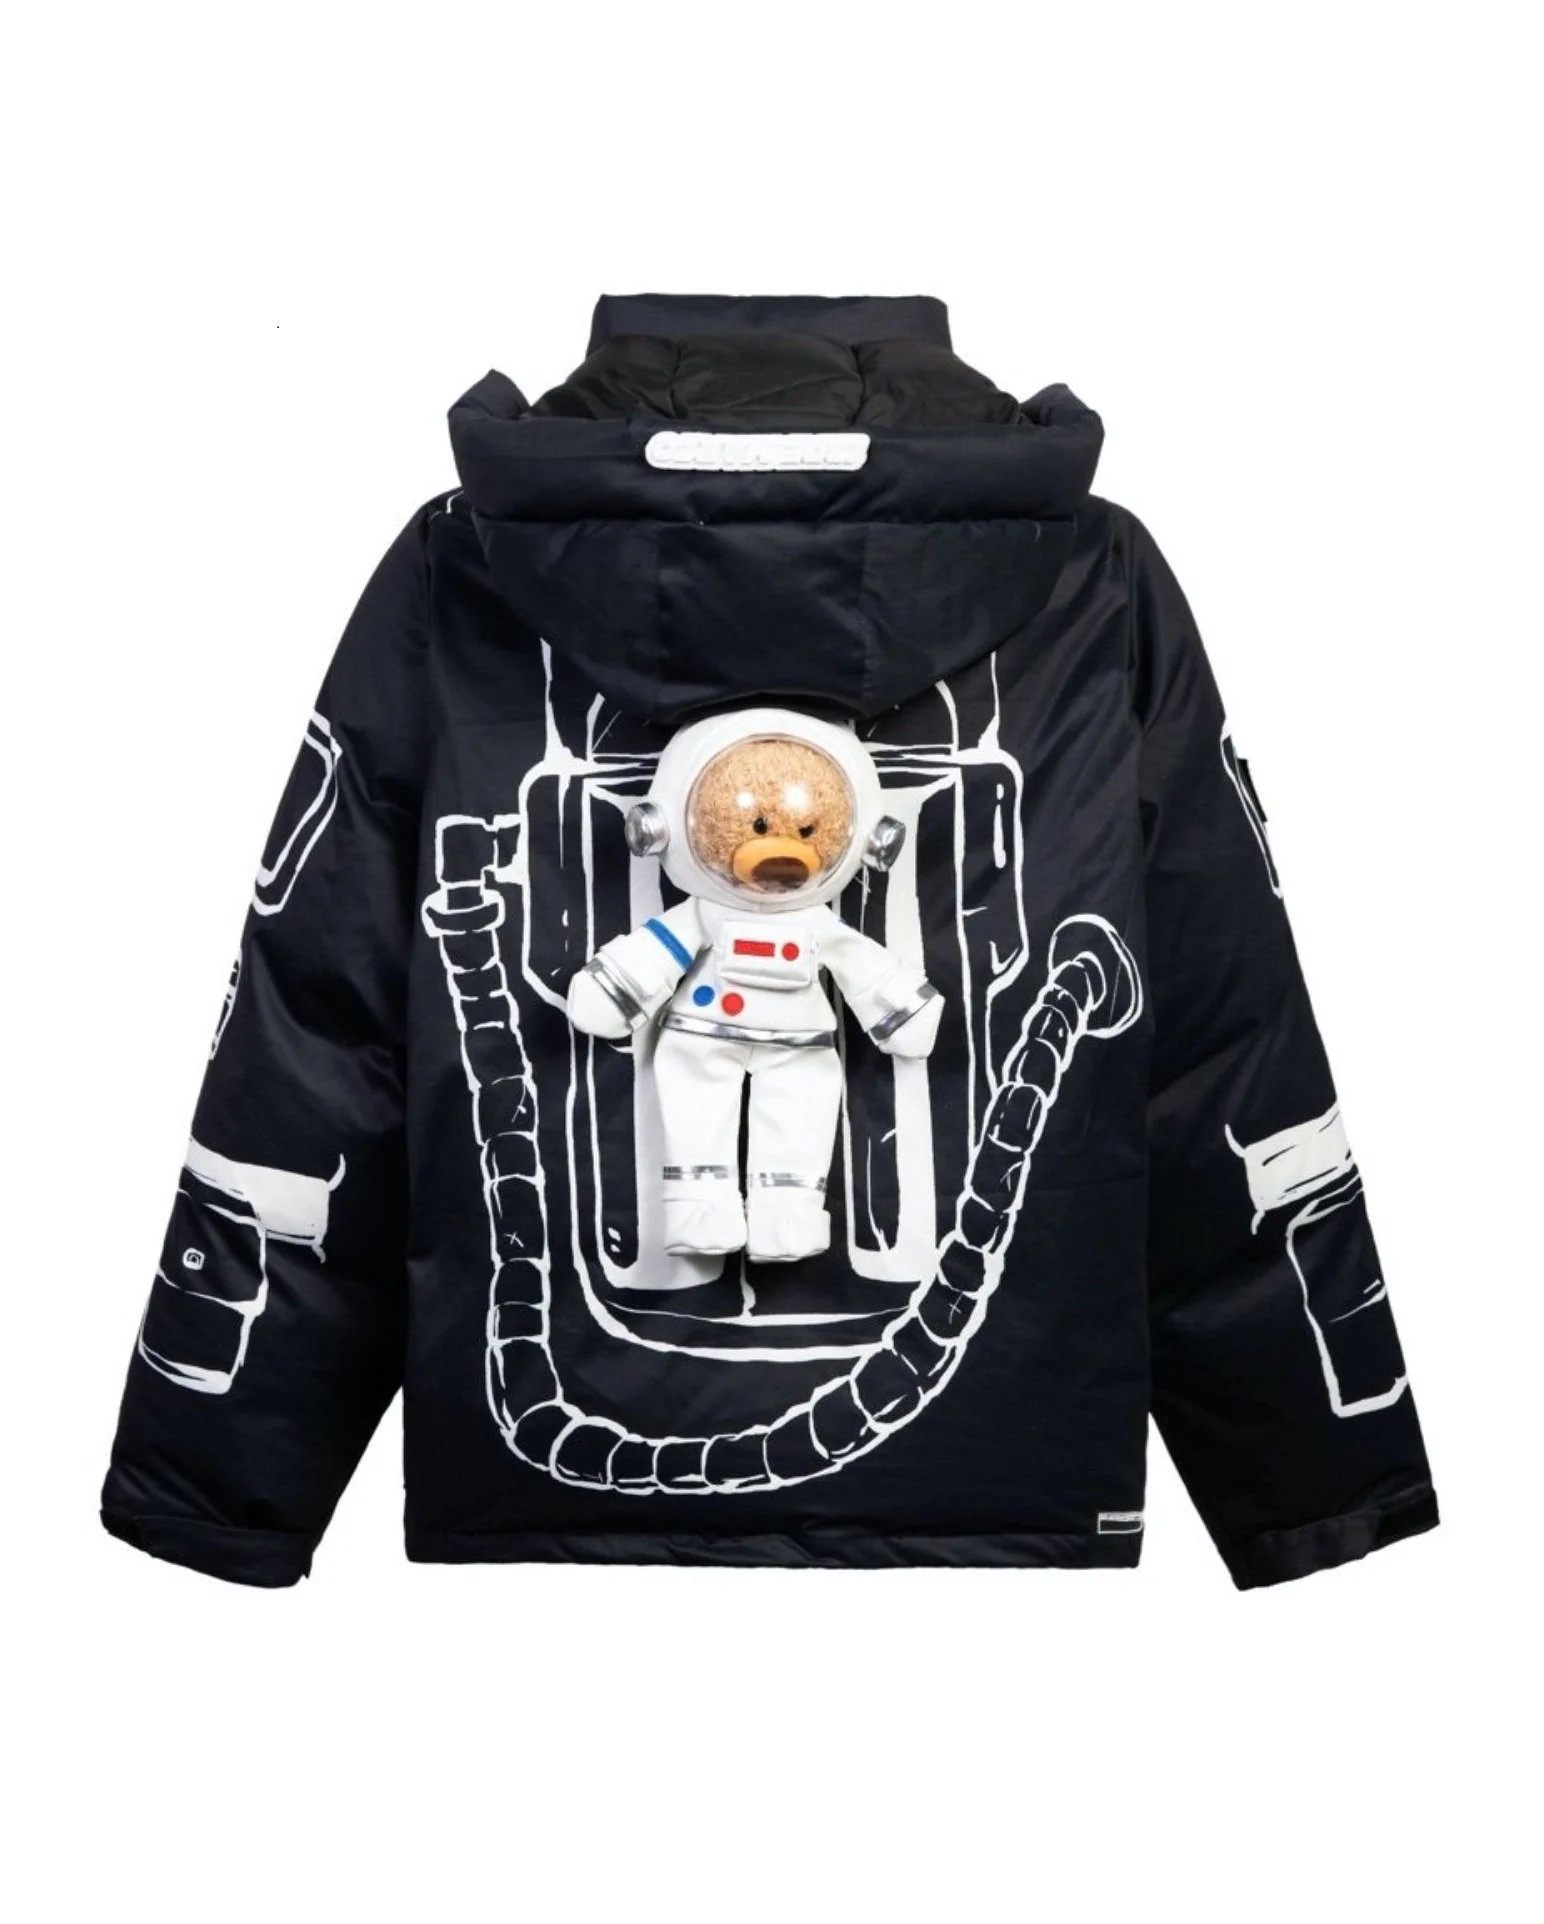 13 De Marzo x NASA Astronaut Teddy Bear Painted Down Jacket Black